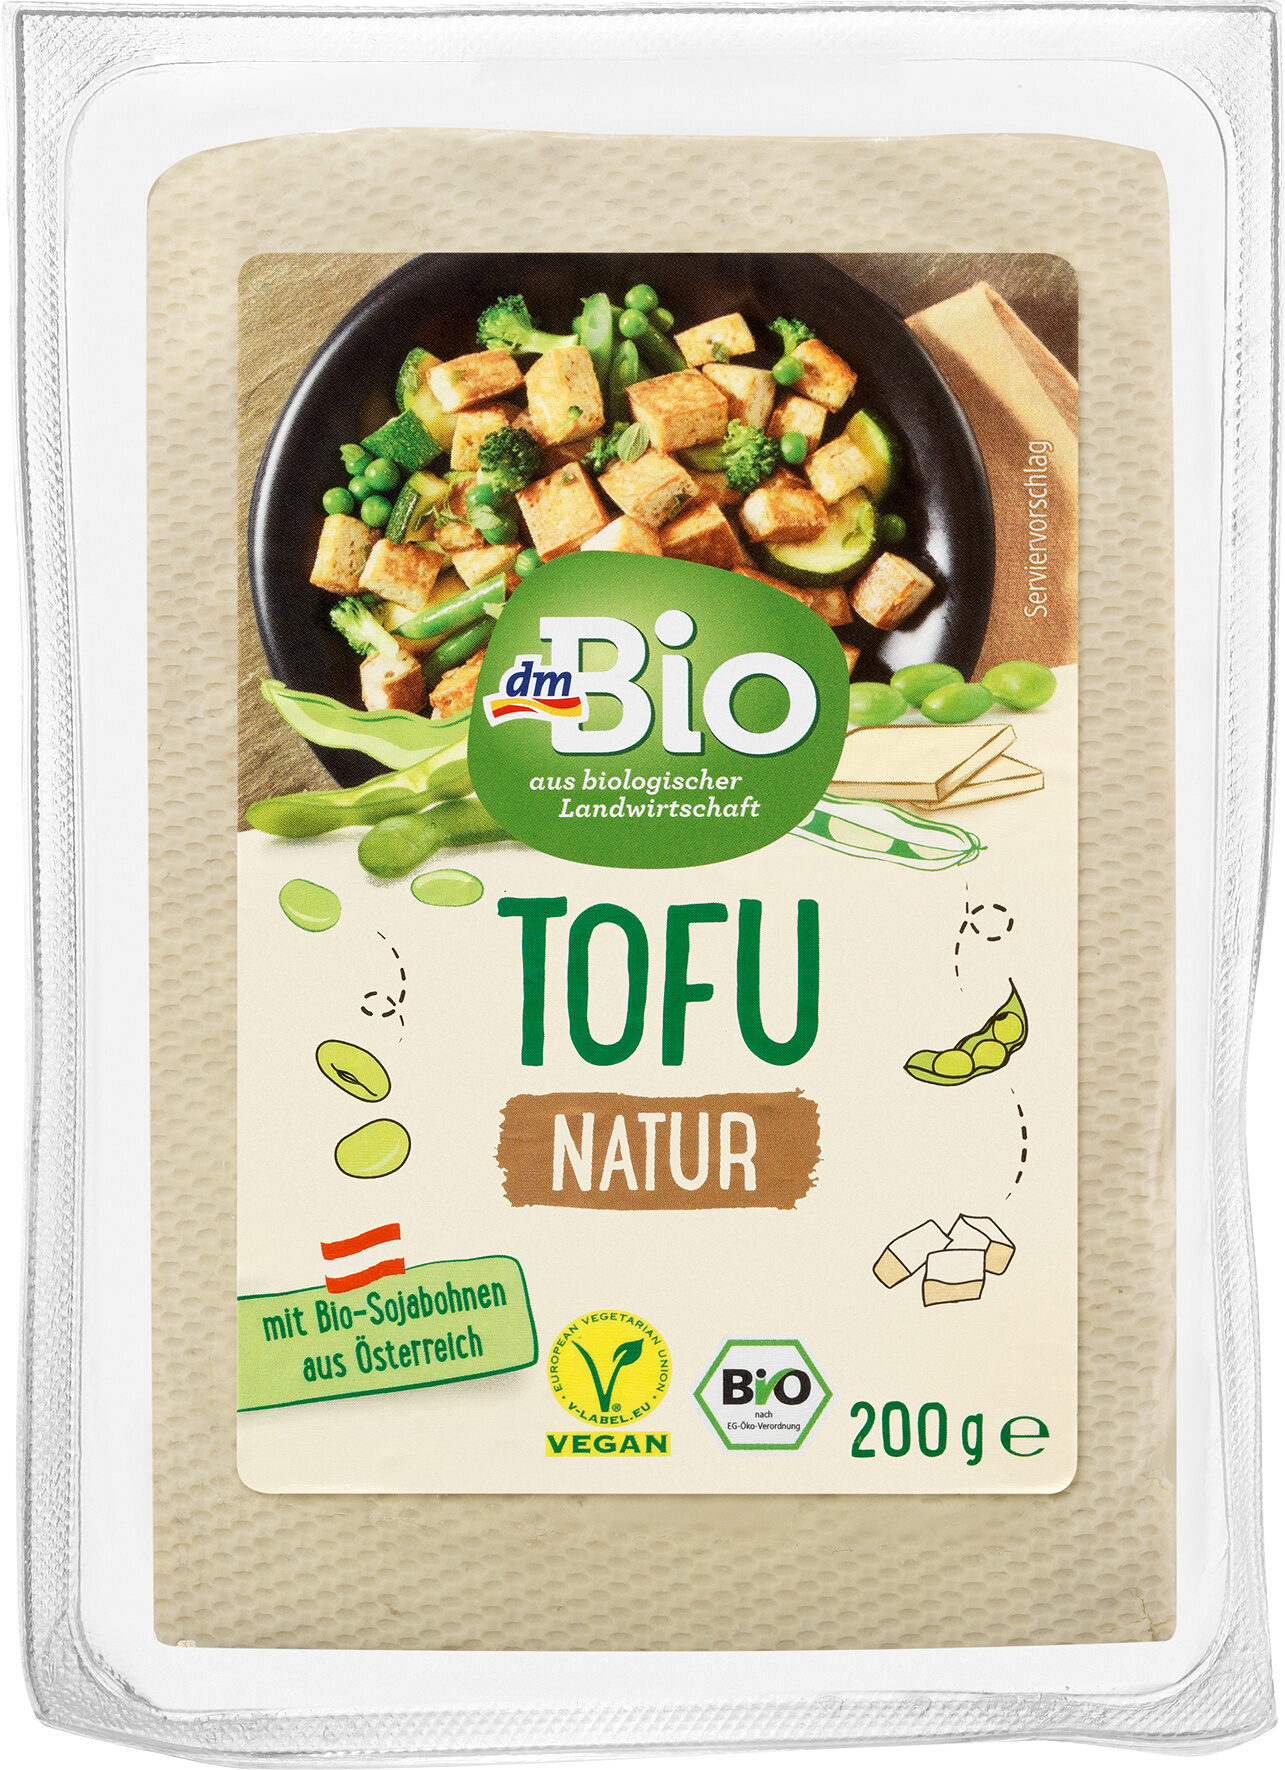 Tofu natur - Product - de